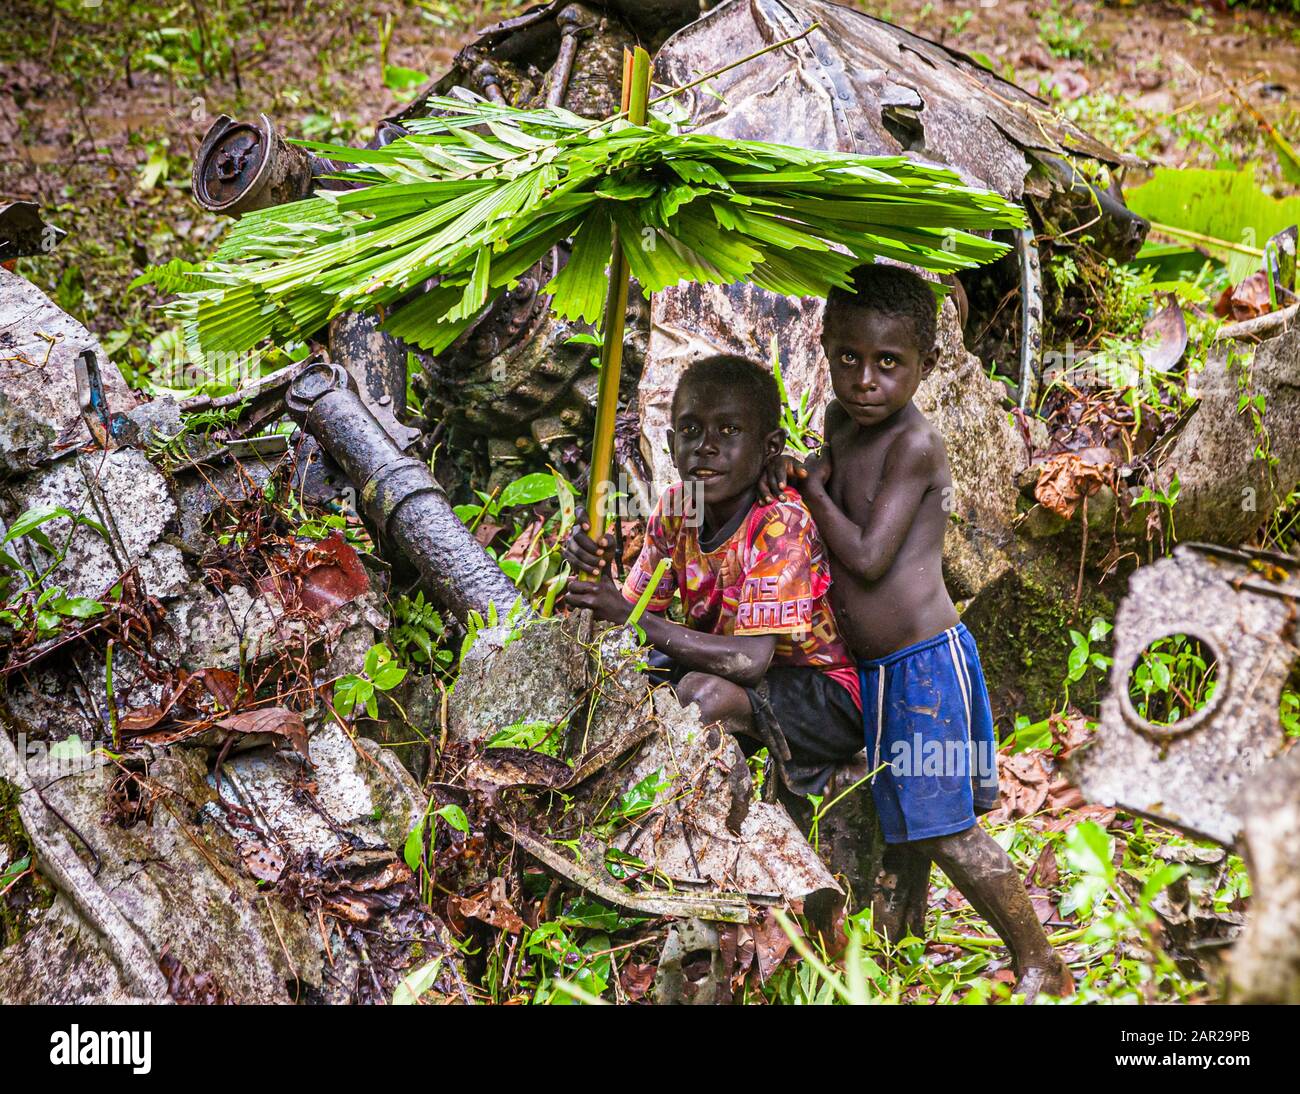 Two boys with self-made rain umbrellas in the jungle of Bougainville, Papua New Guinea Stock Photo